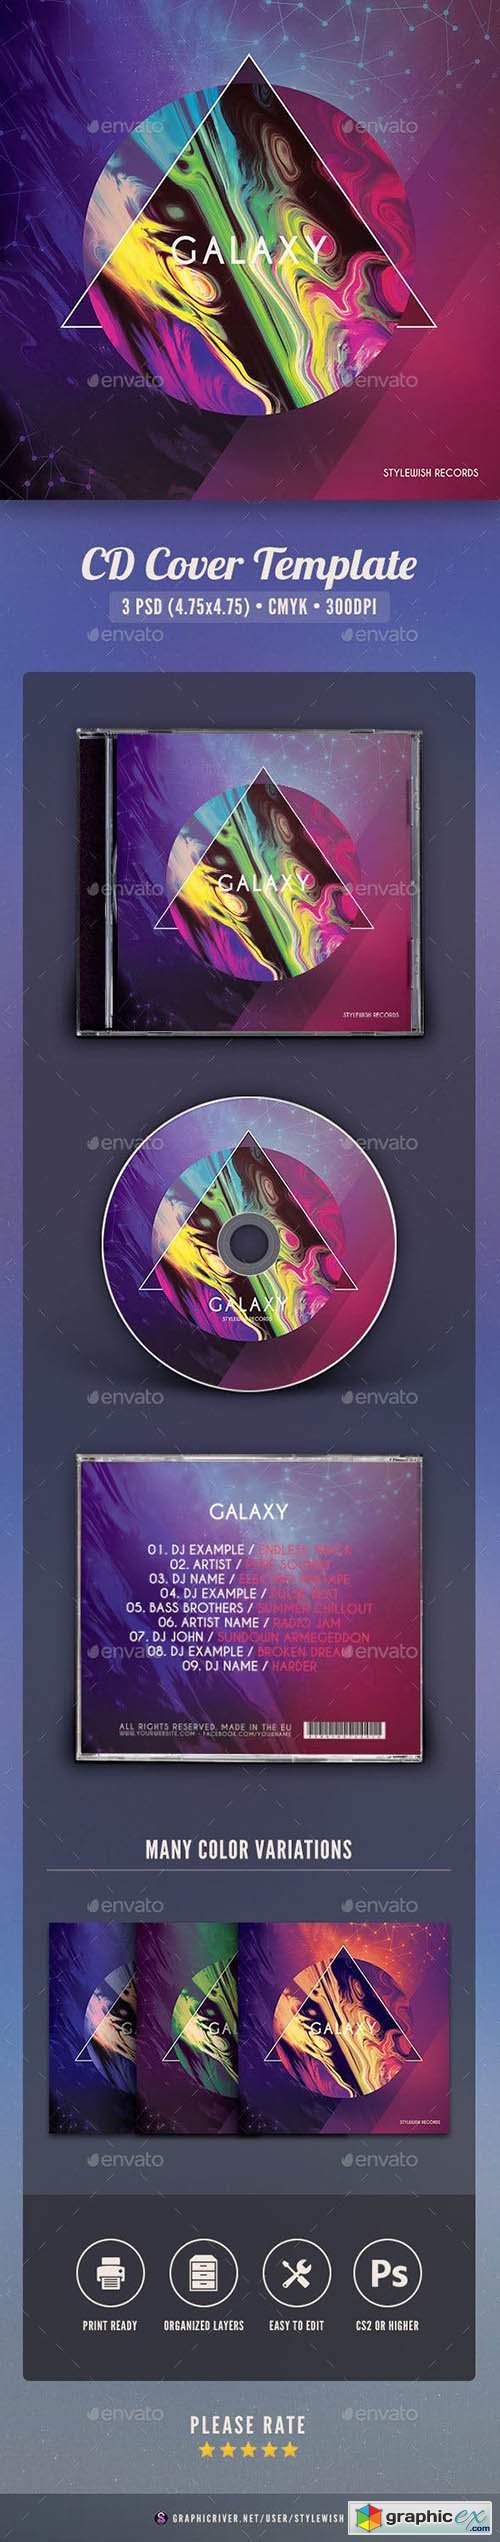 Galaxy CD Cover Artwork